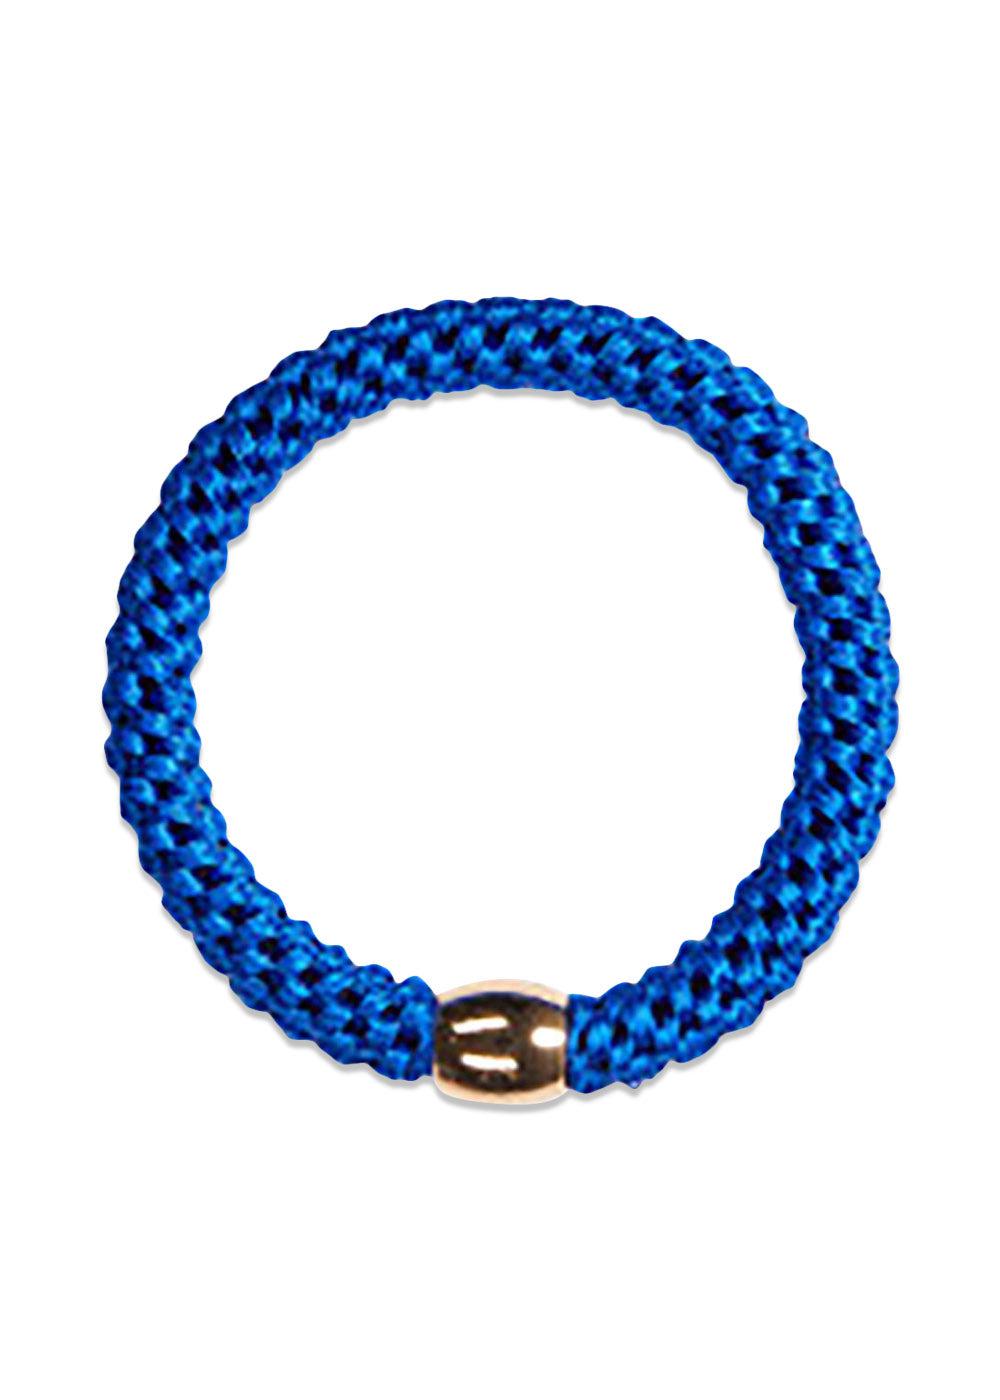 PICO's Gia Perle elastik - Ultramarine Blue. Køb håraccessories her.